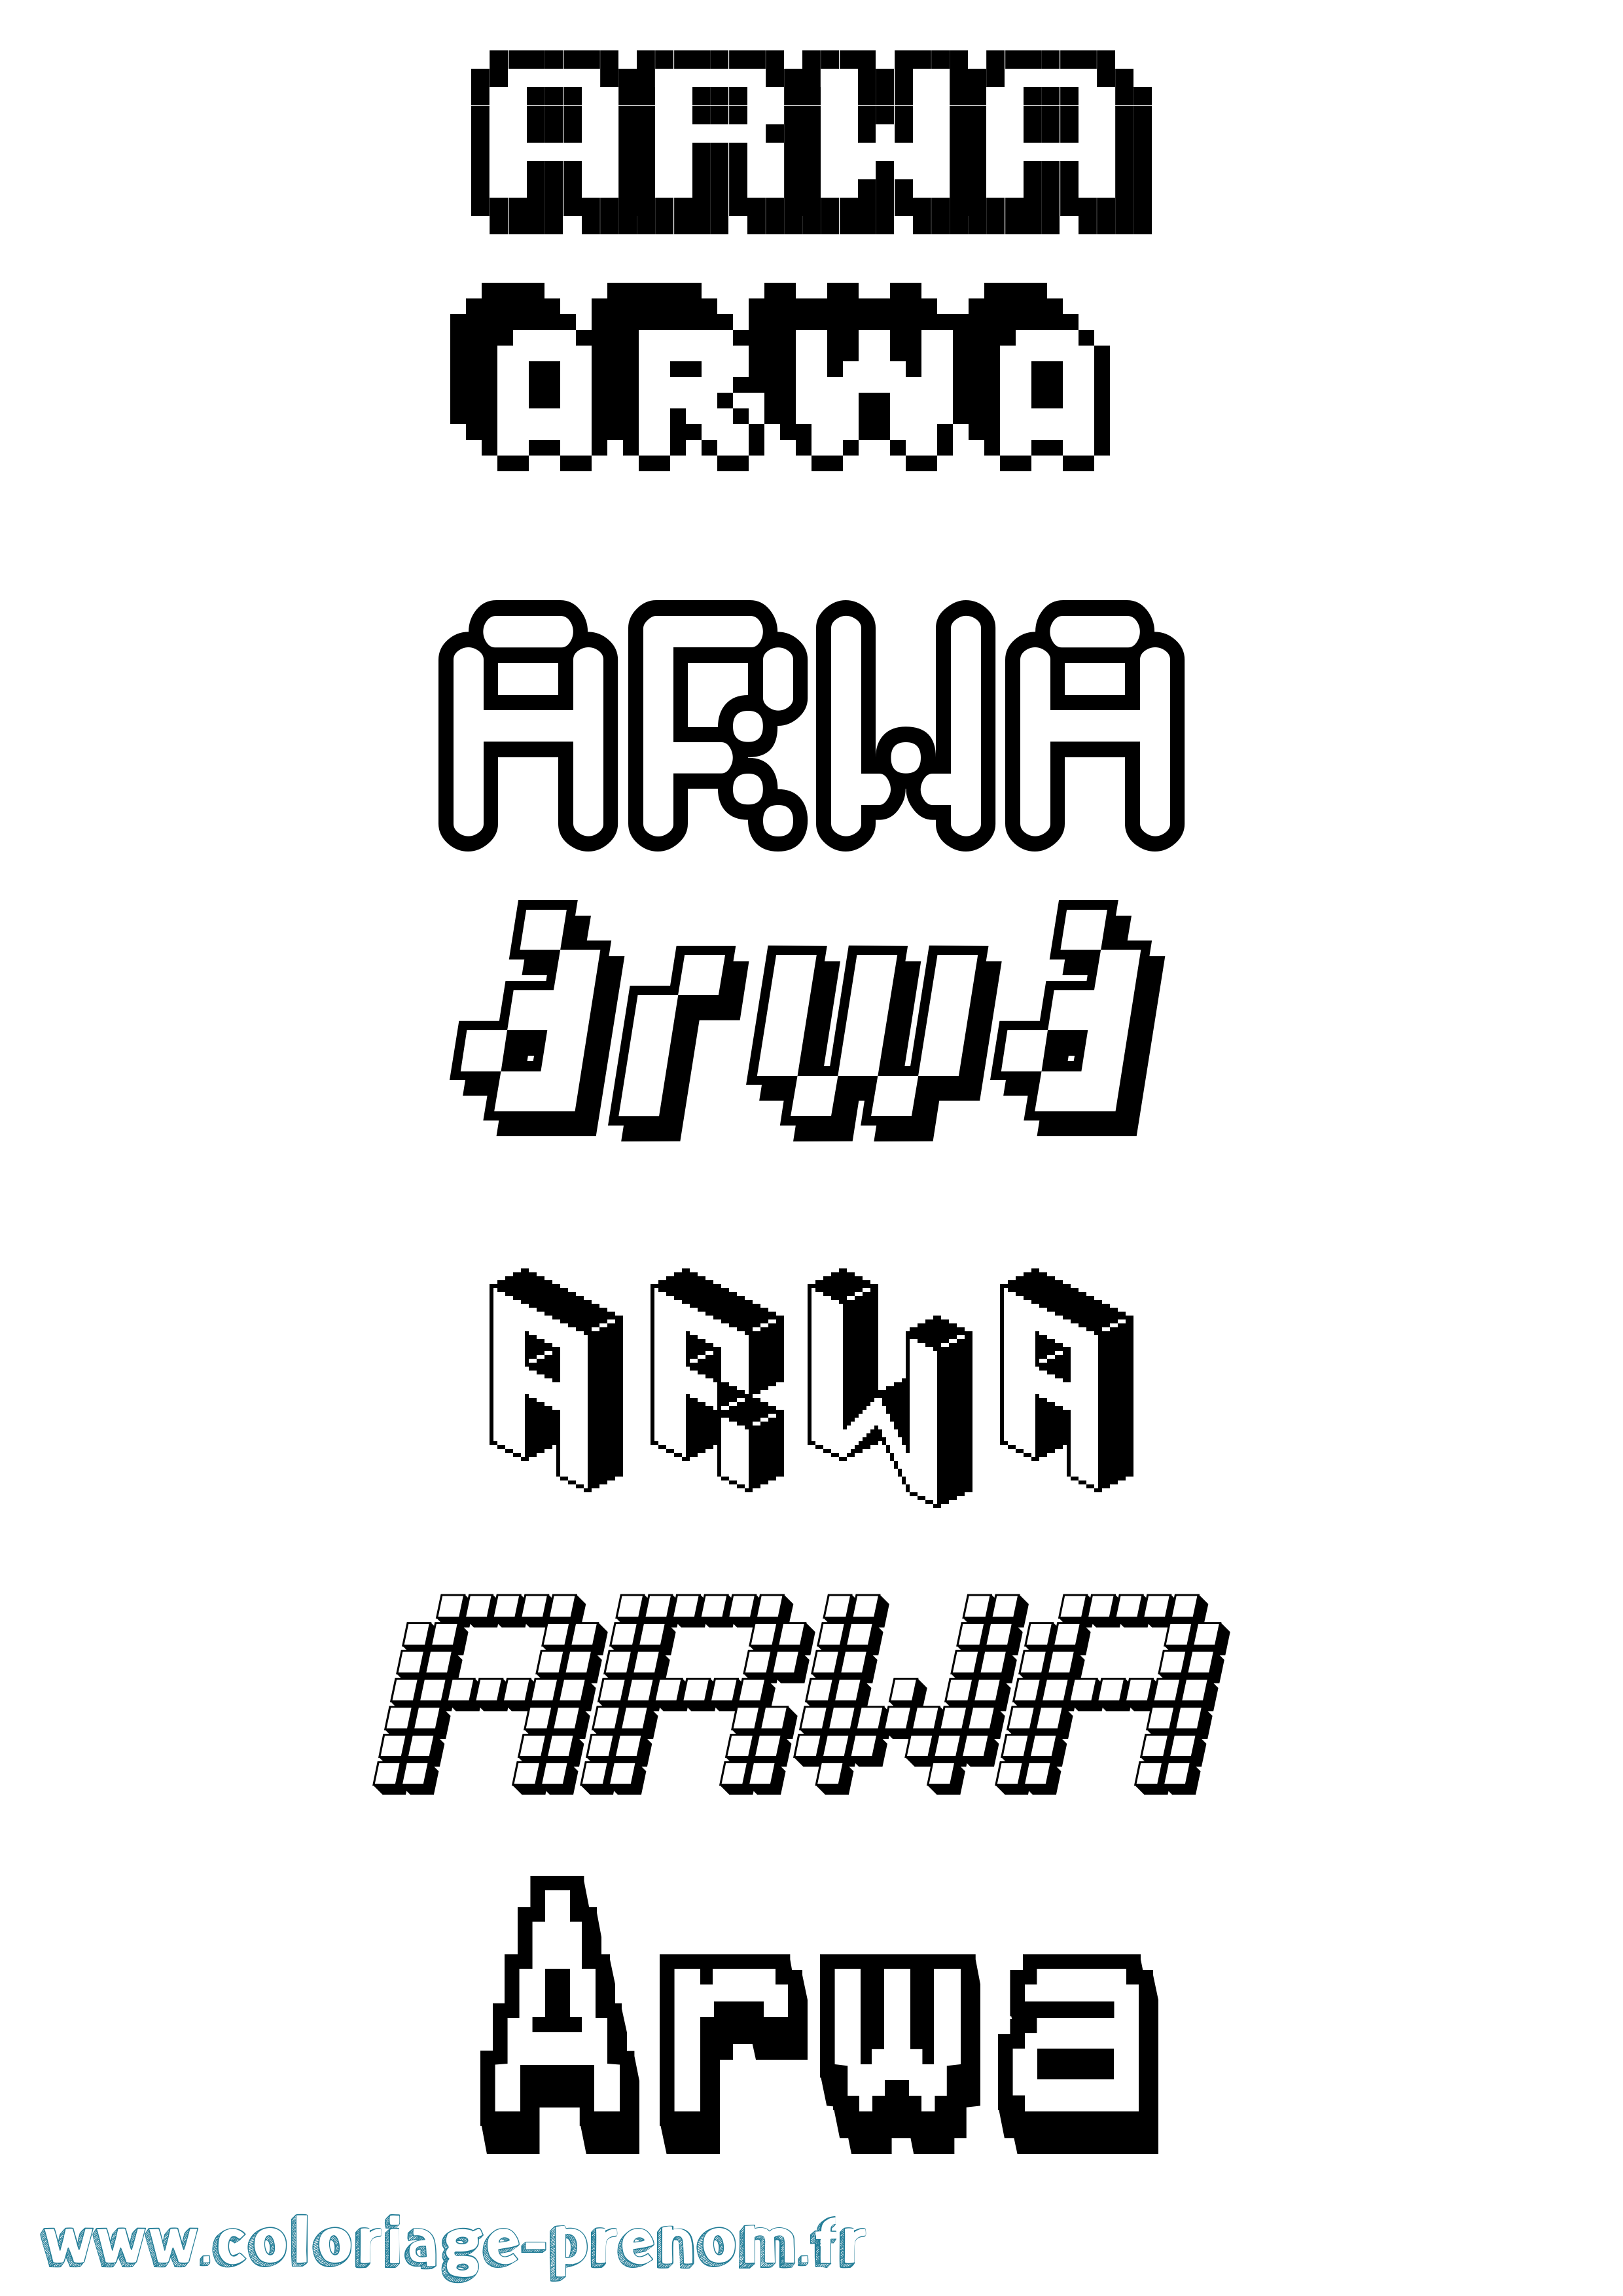 Coloriage prénom Arwa